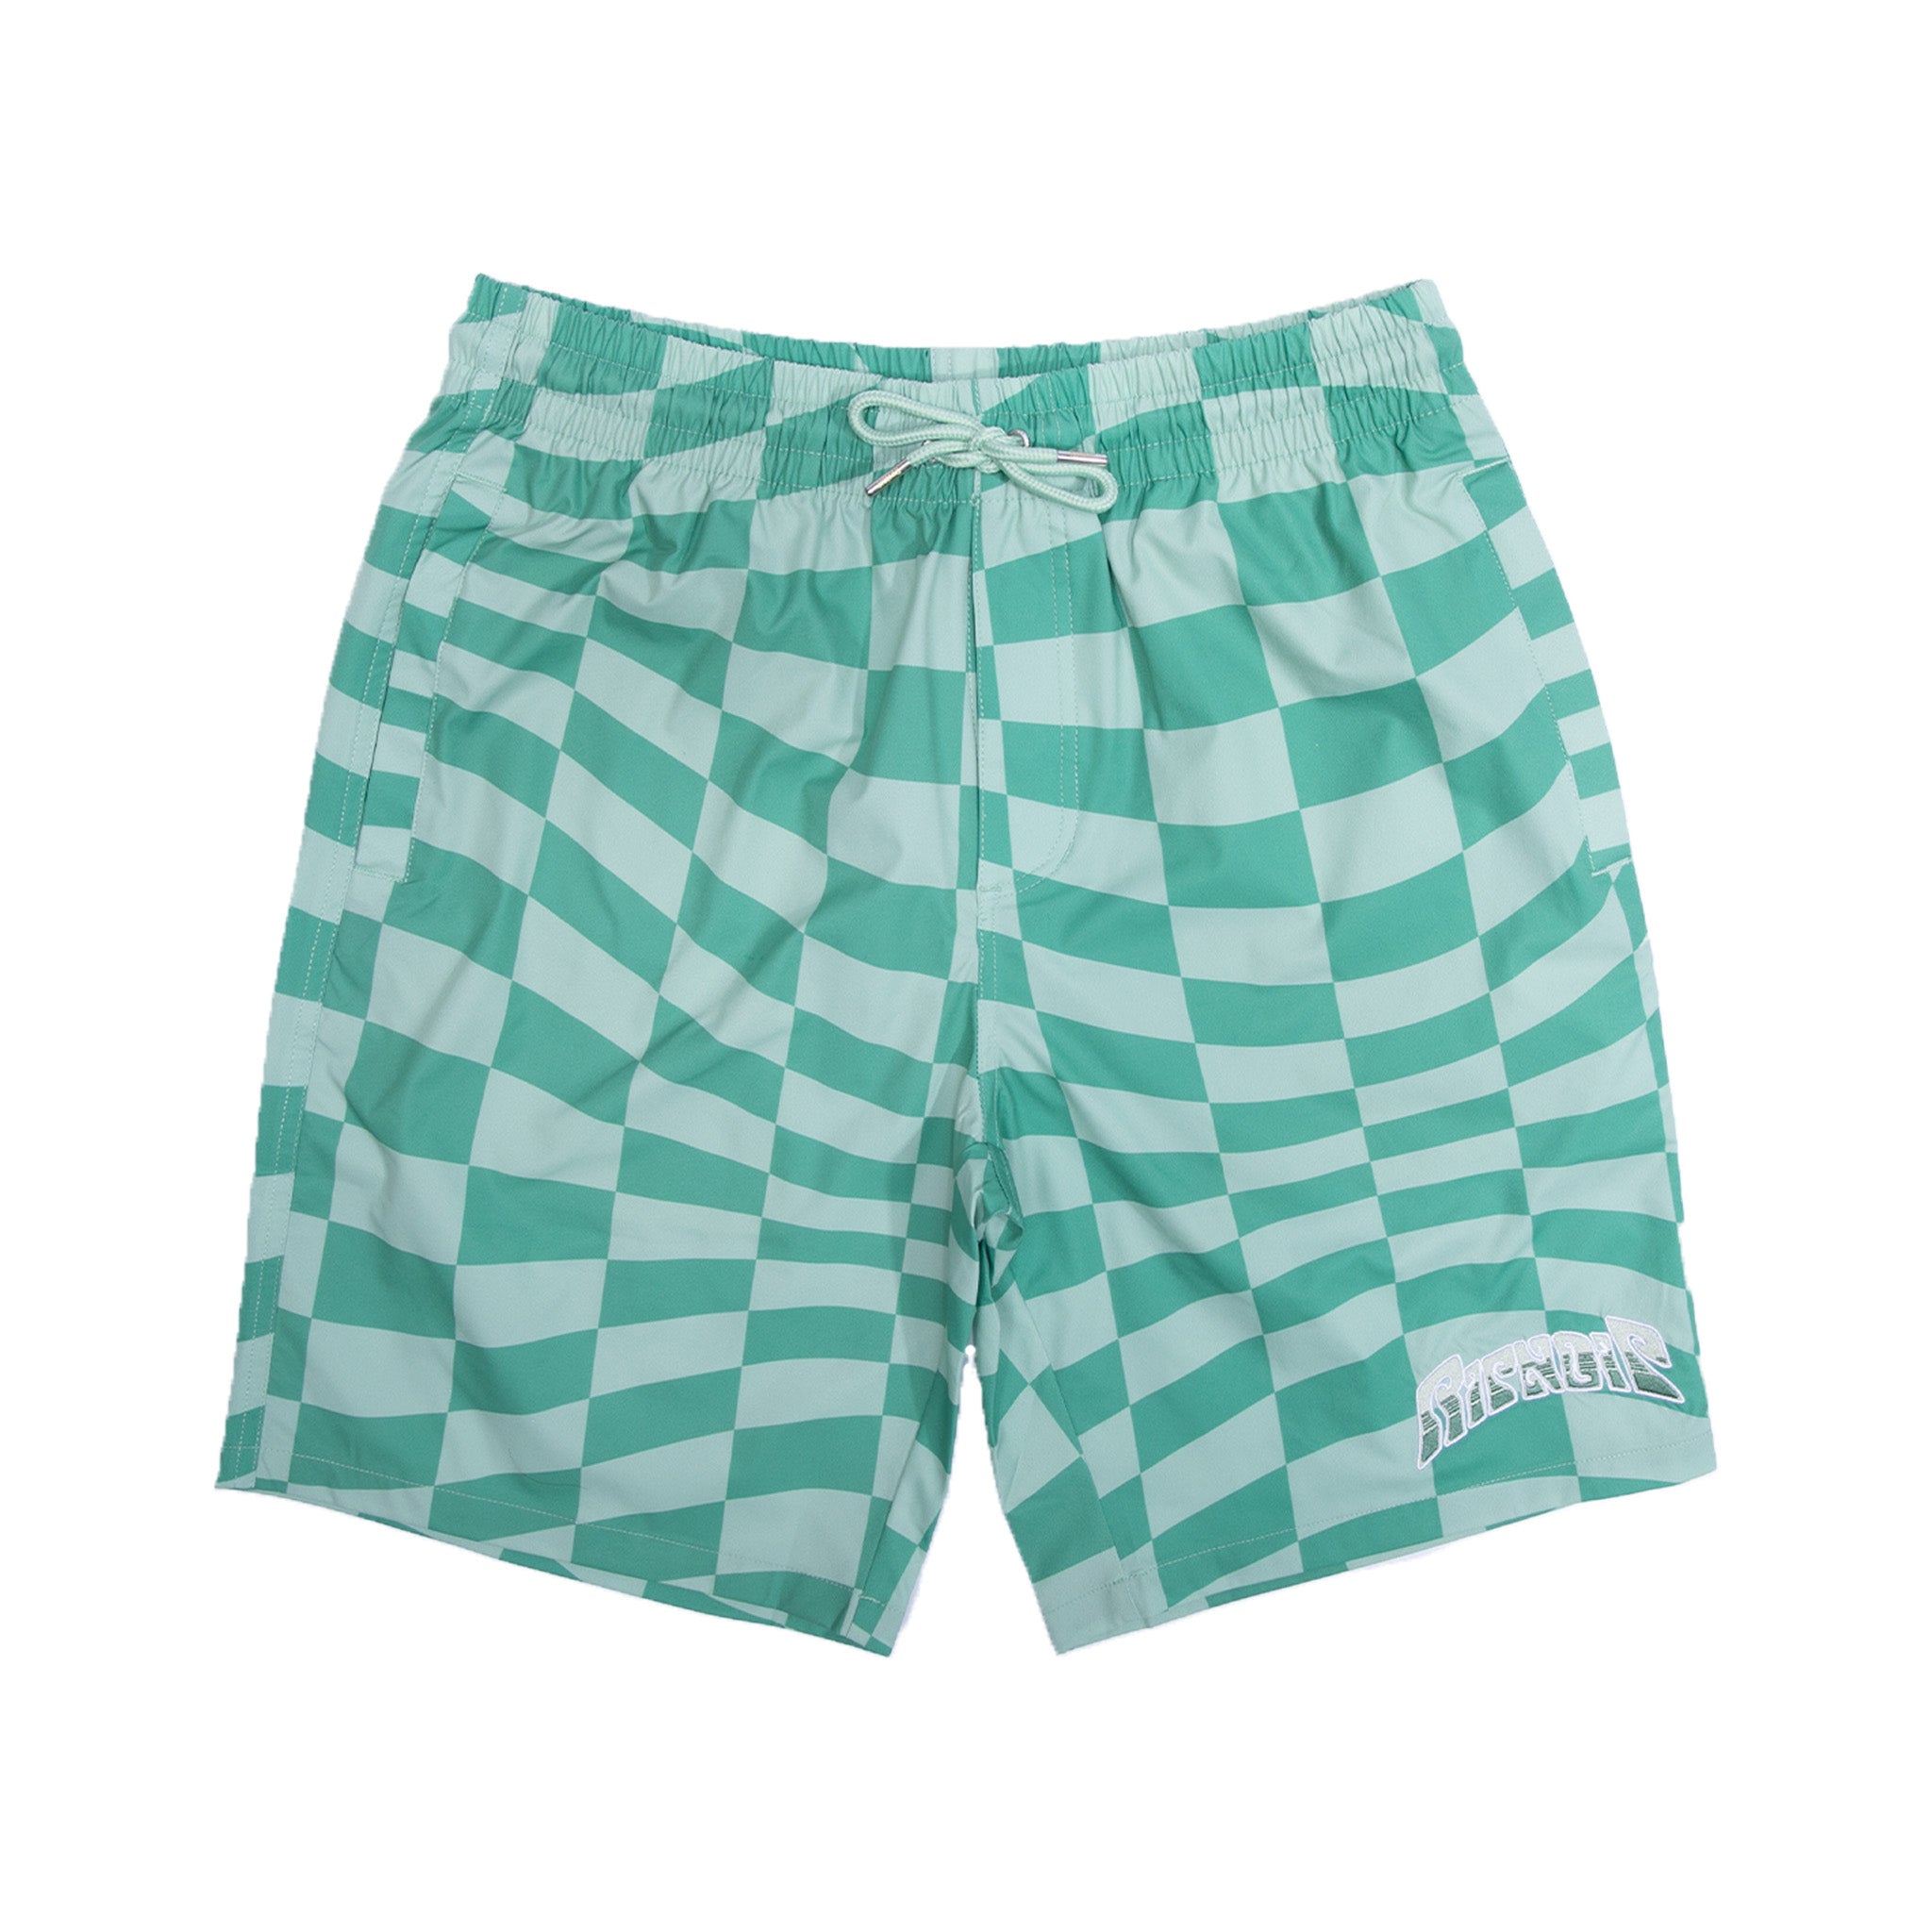 Checked Swim Shorts (Olive/Pine)